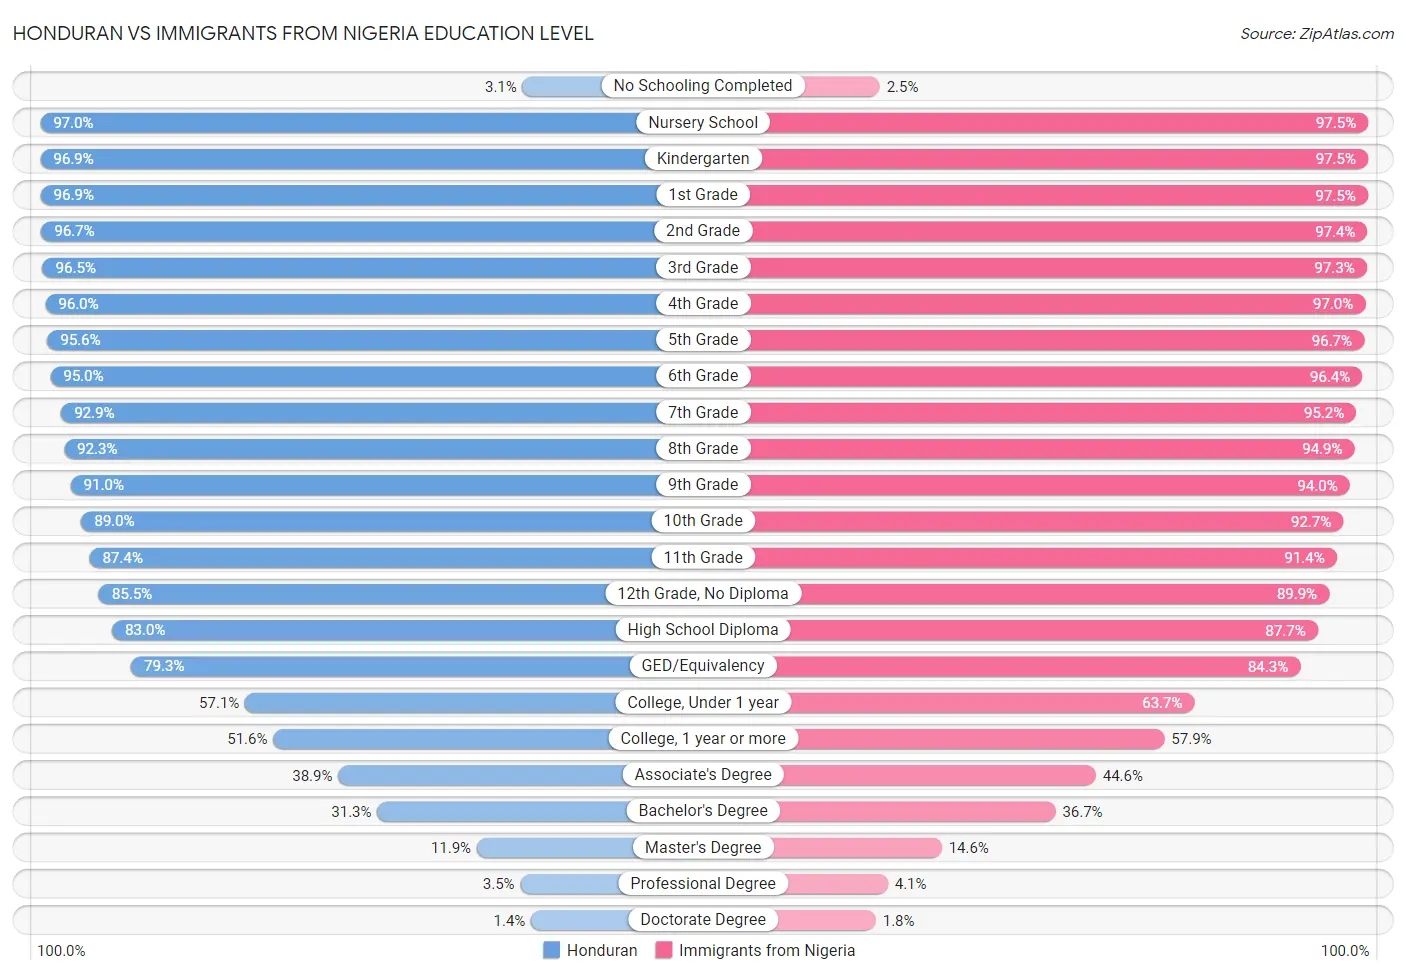 Honduran vs Immigrants from Nigeria Education Level